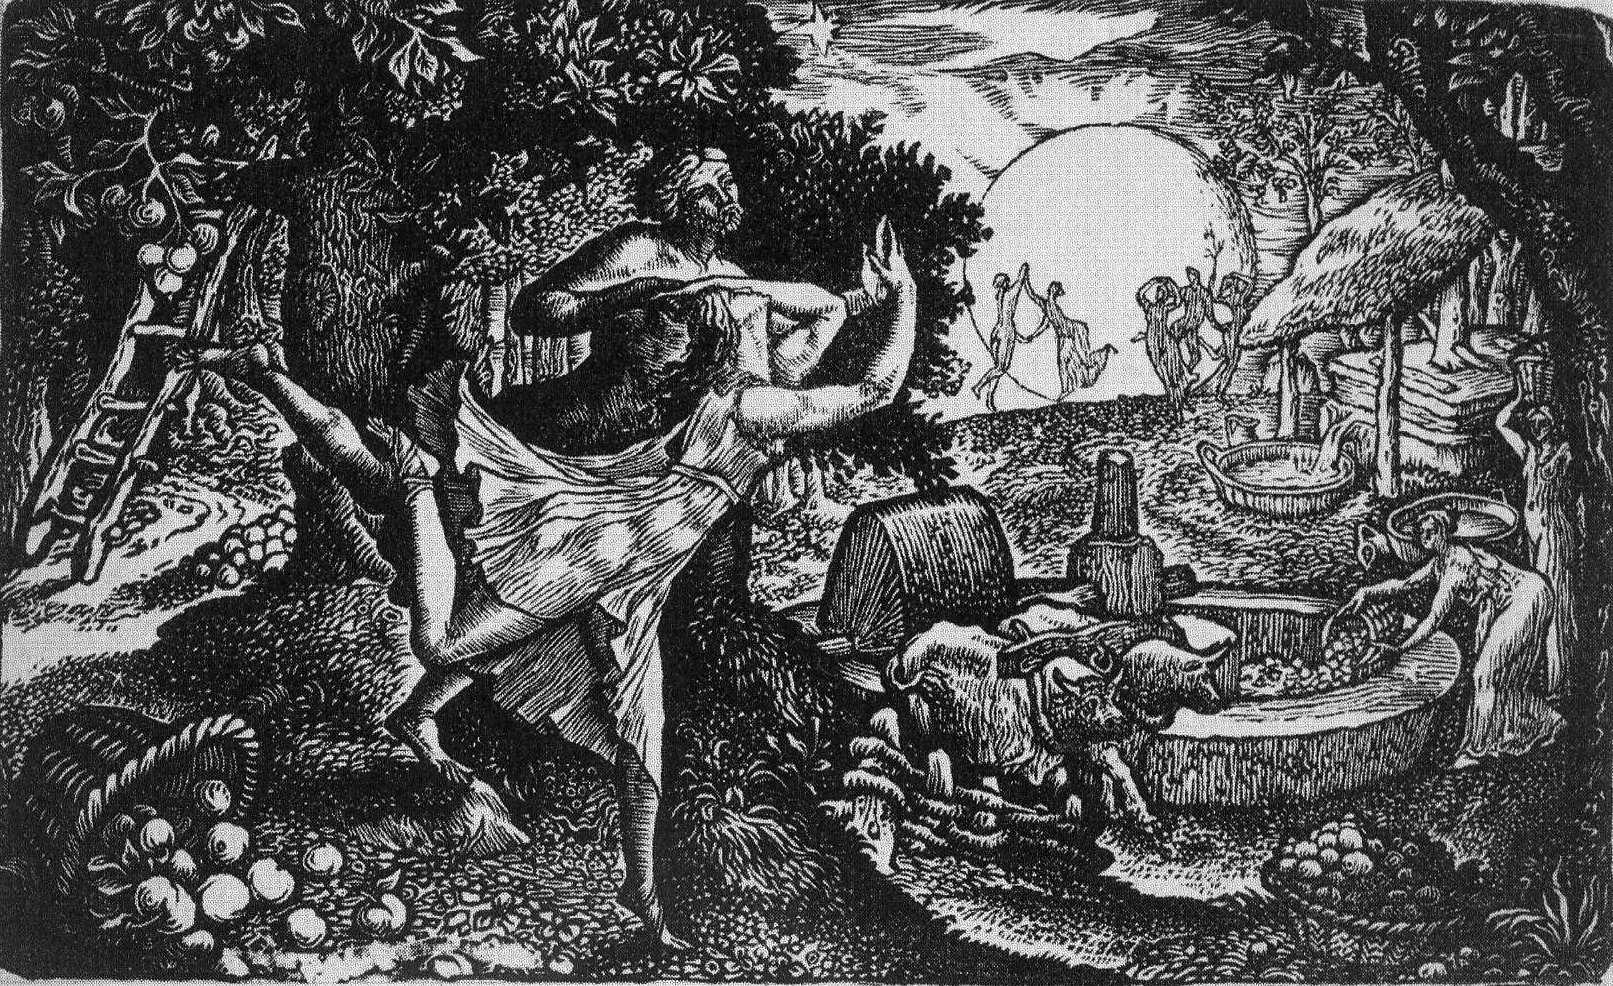 ‘The Cyder Feast’ by Edward Calvert, 1828